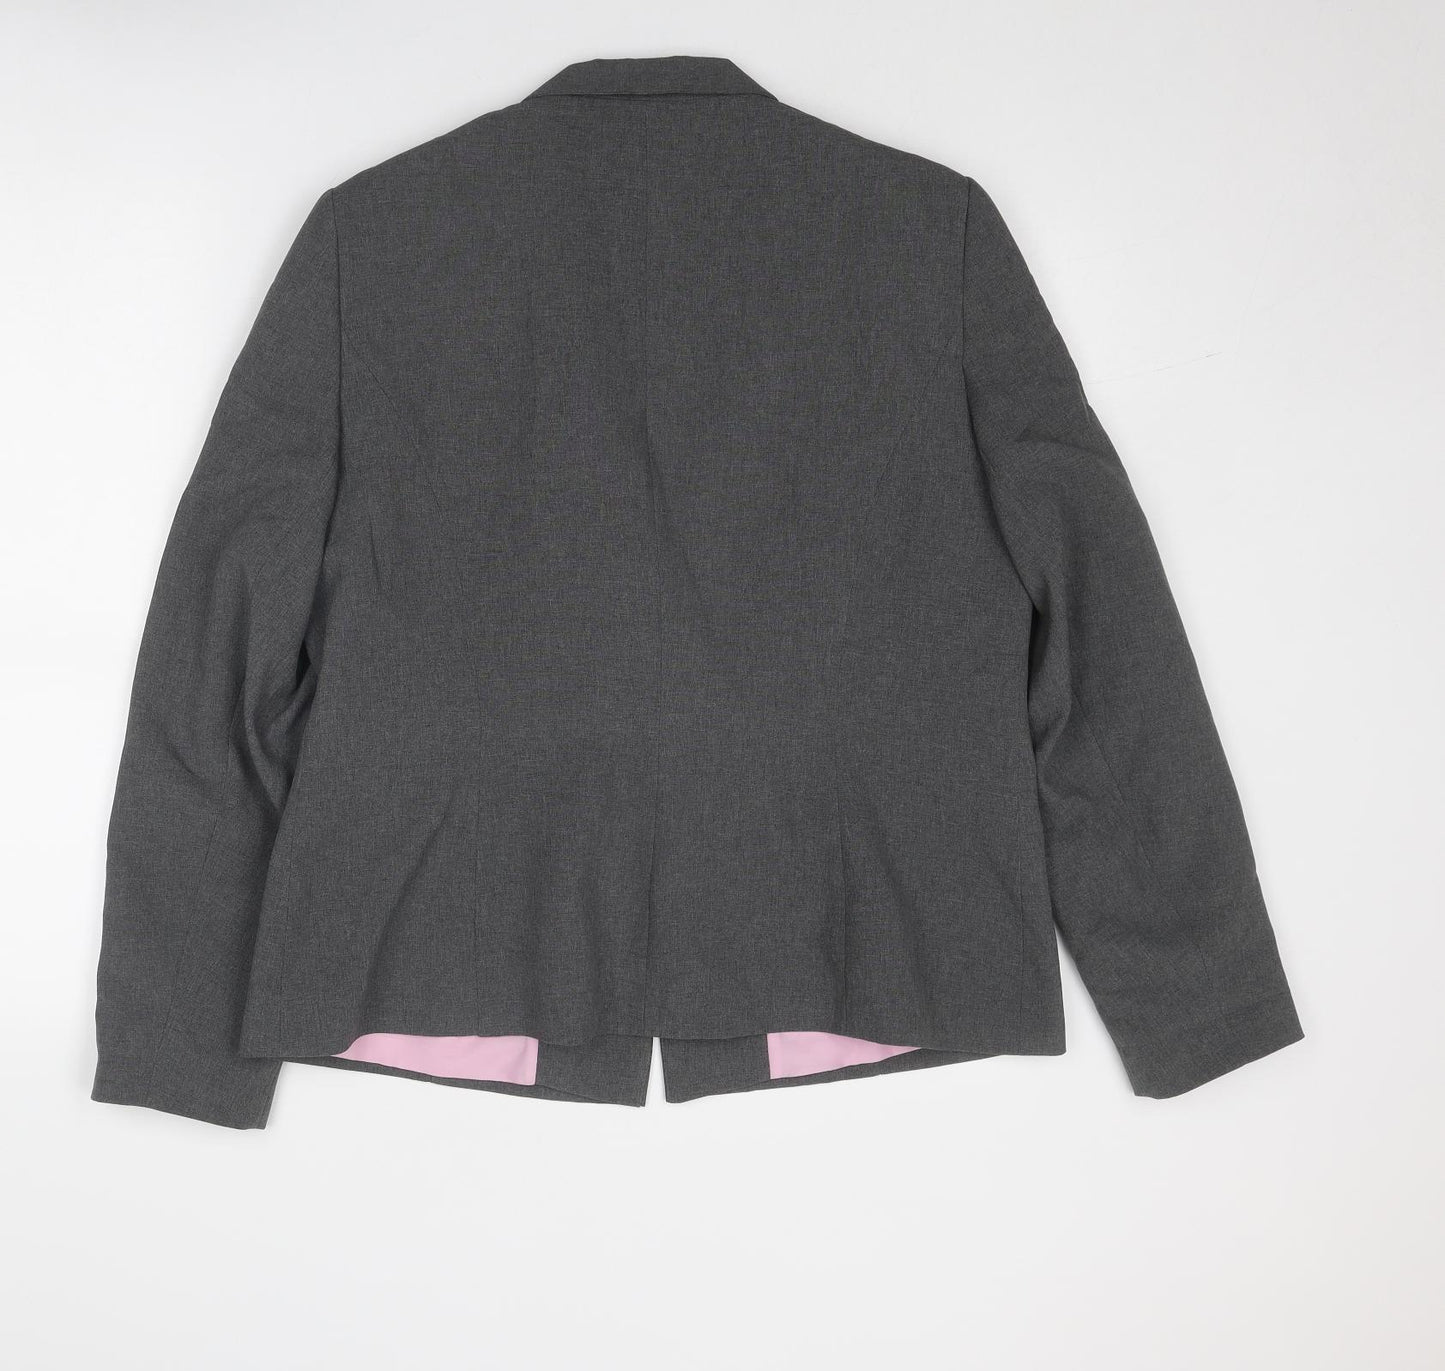 Dorothy Perkins Womens Grey Polyester Jacket Suit Jacket Size 16